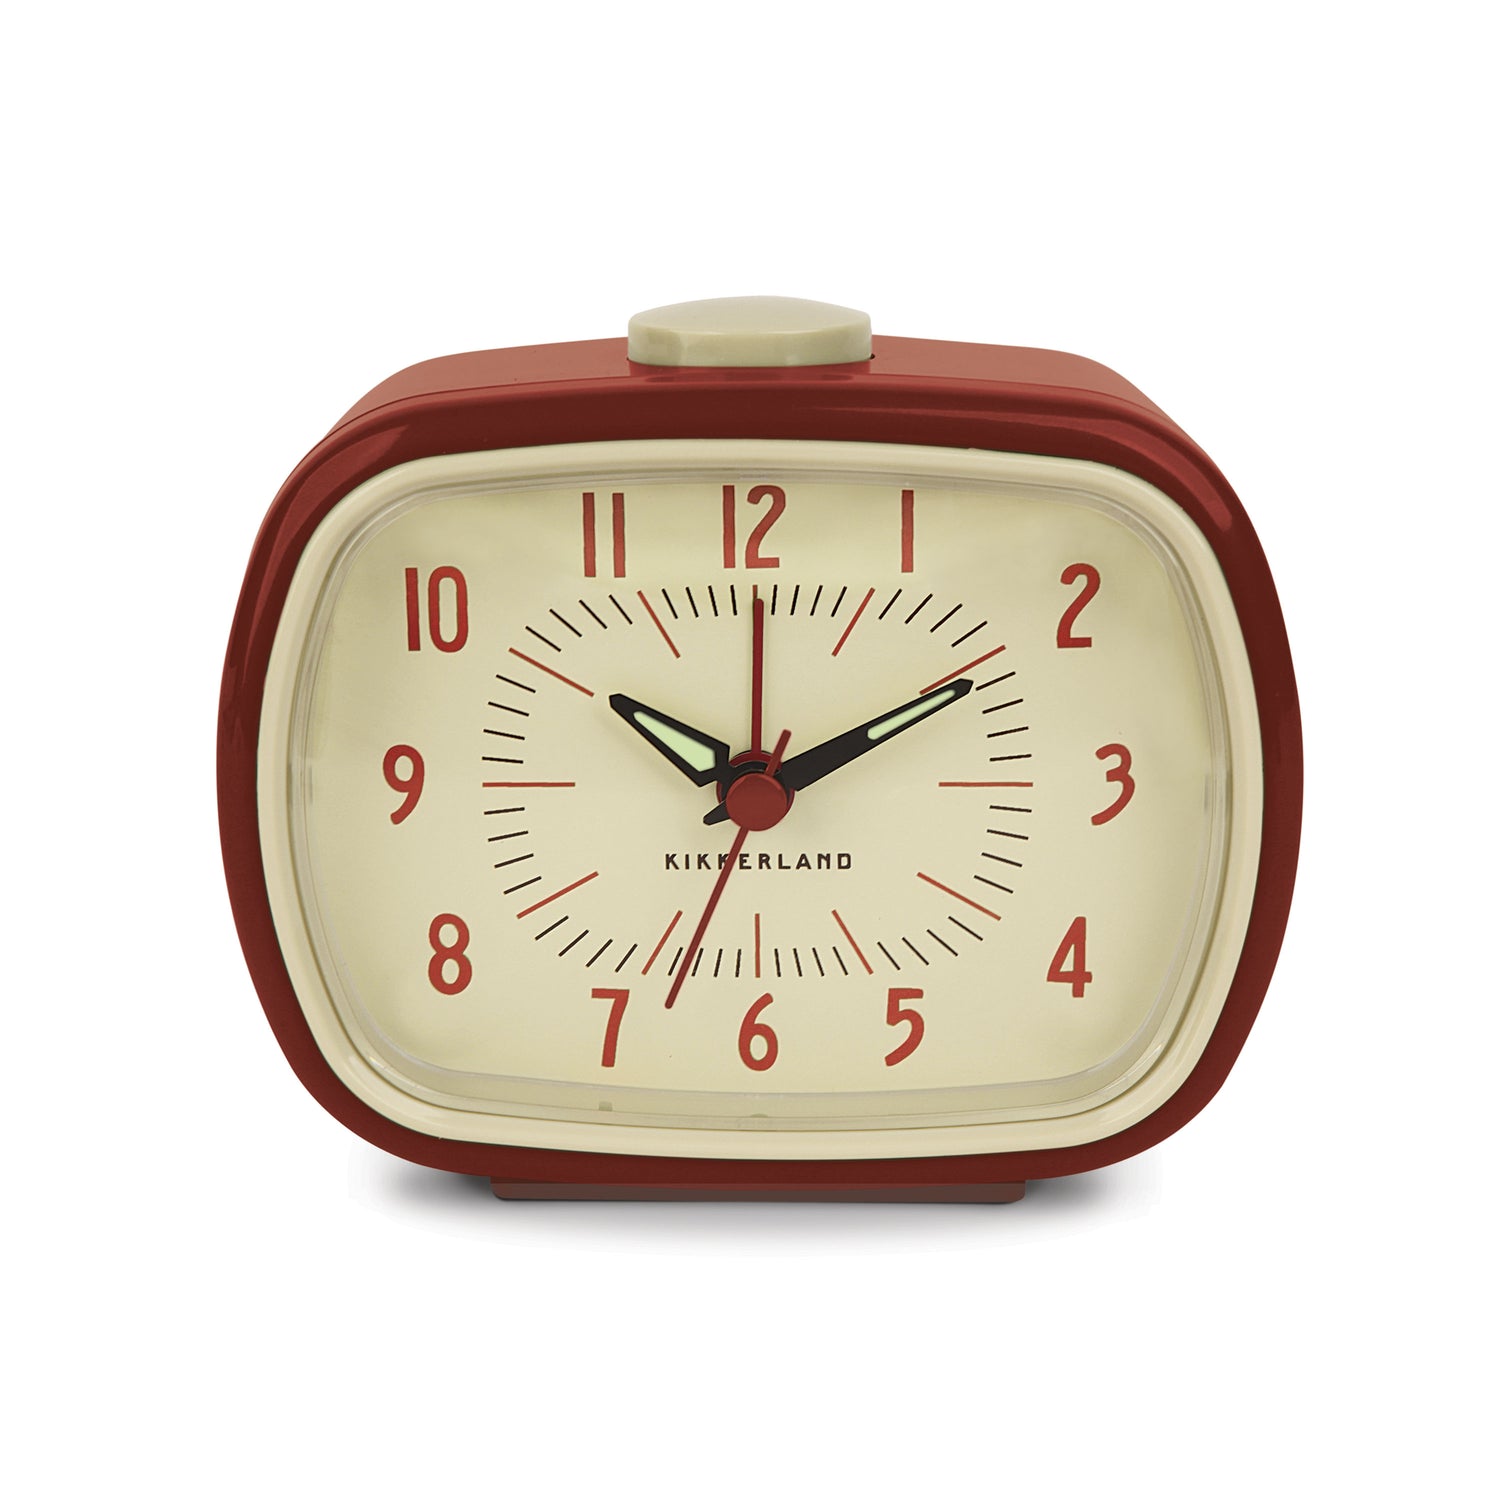 Reloj despertador retro + rojo